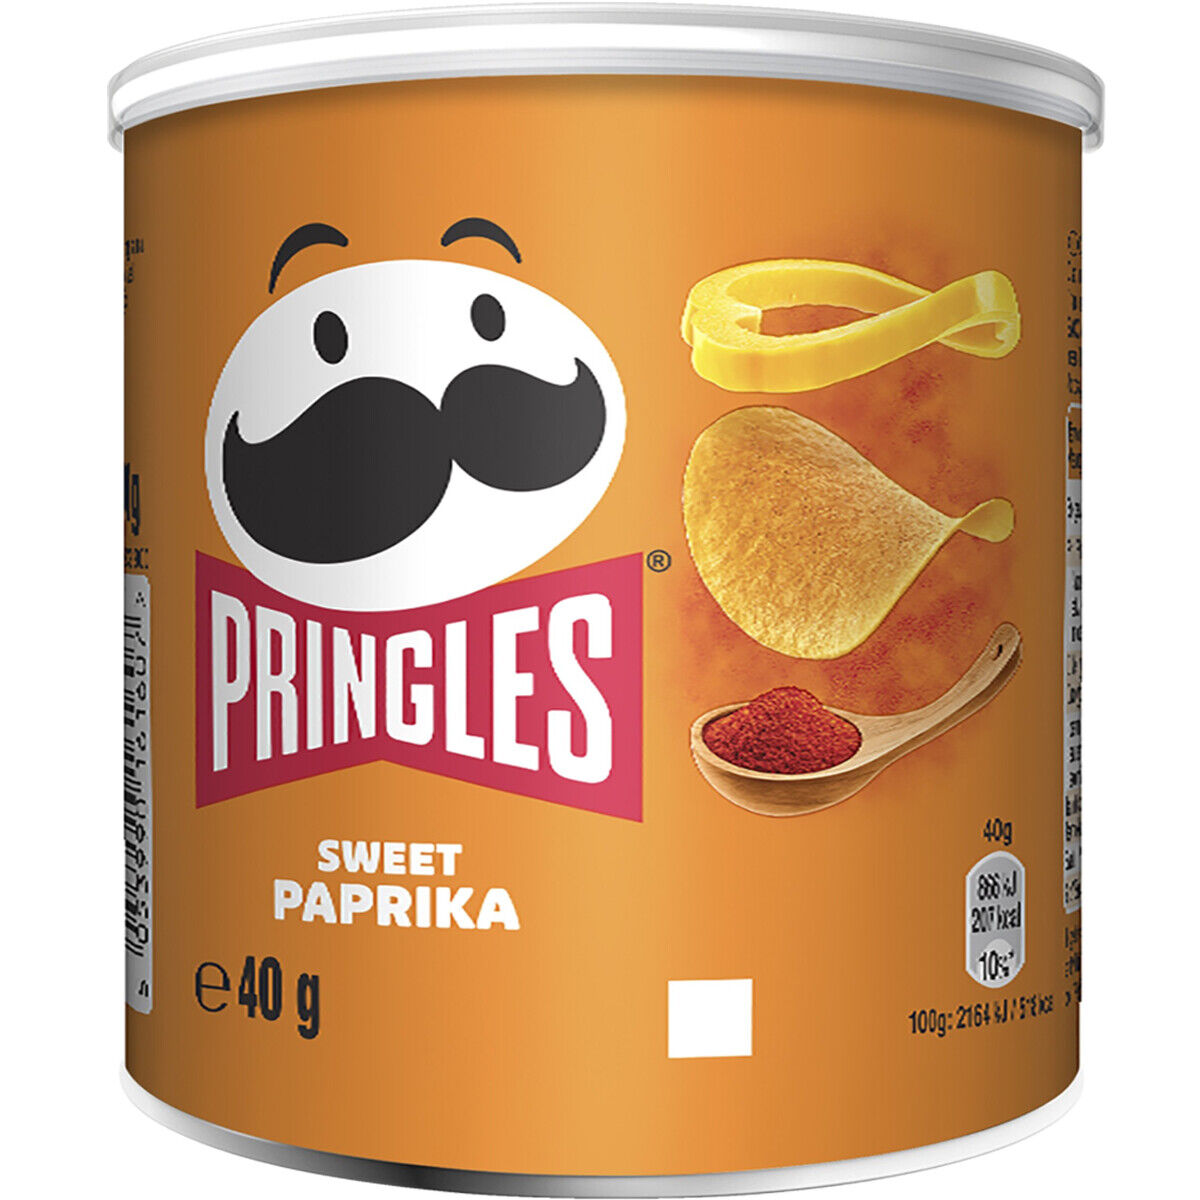 Aperitivo de patata sabor Paprika Pringles  40g